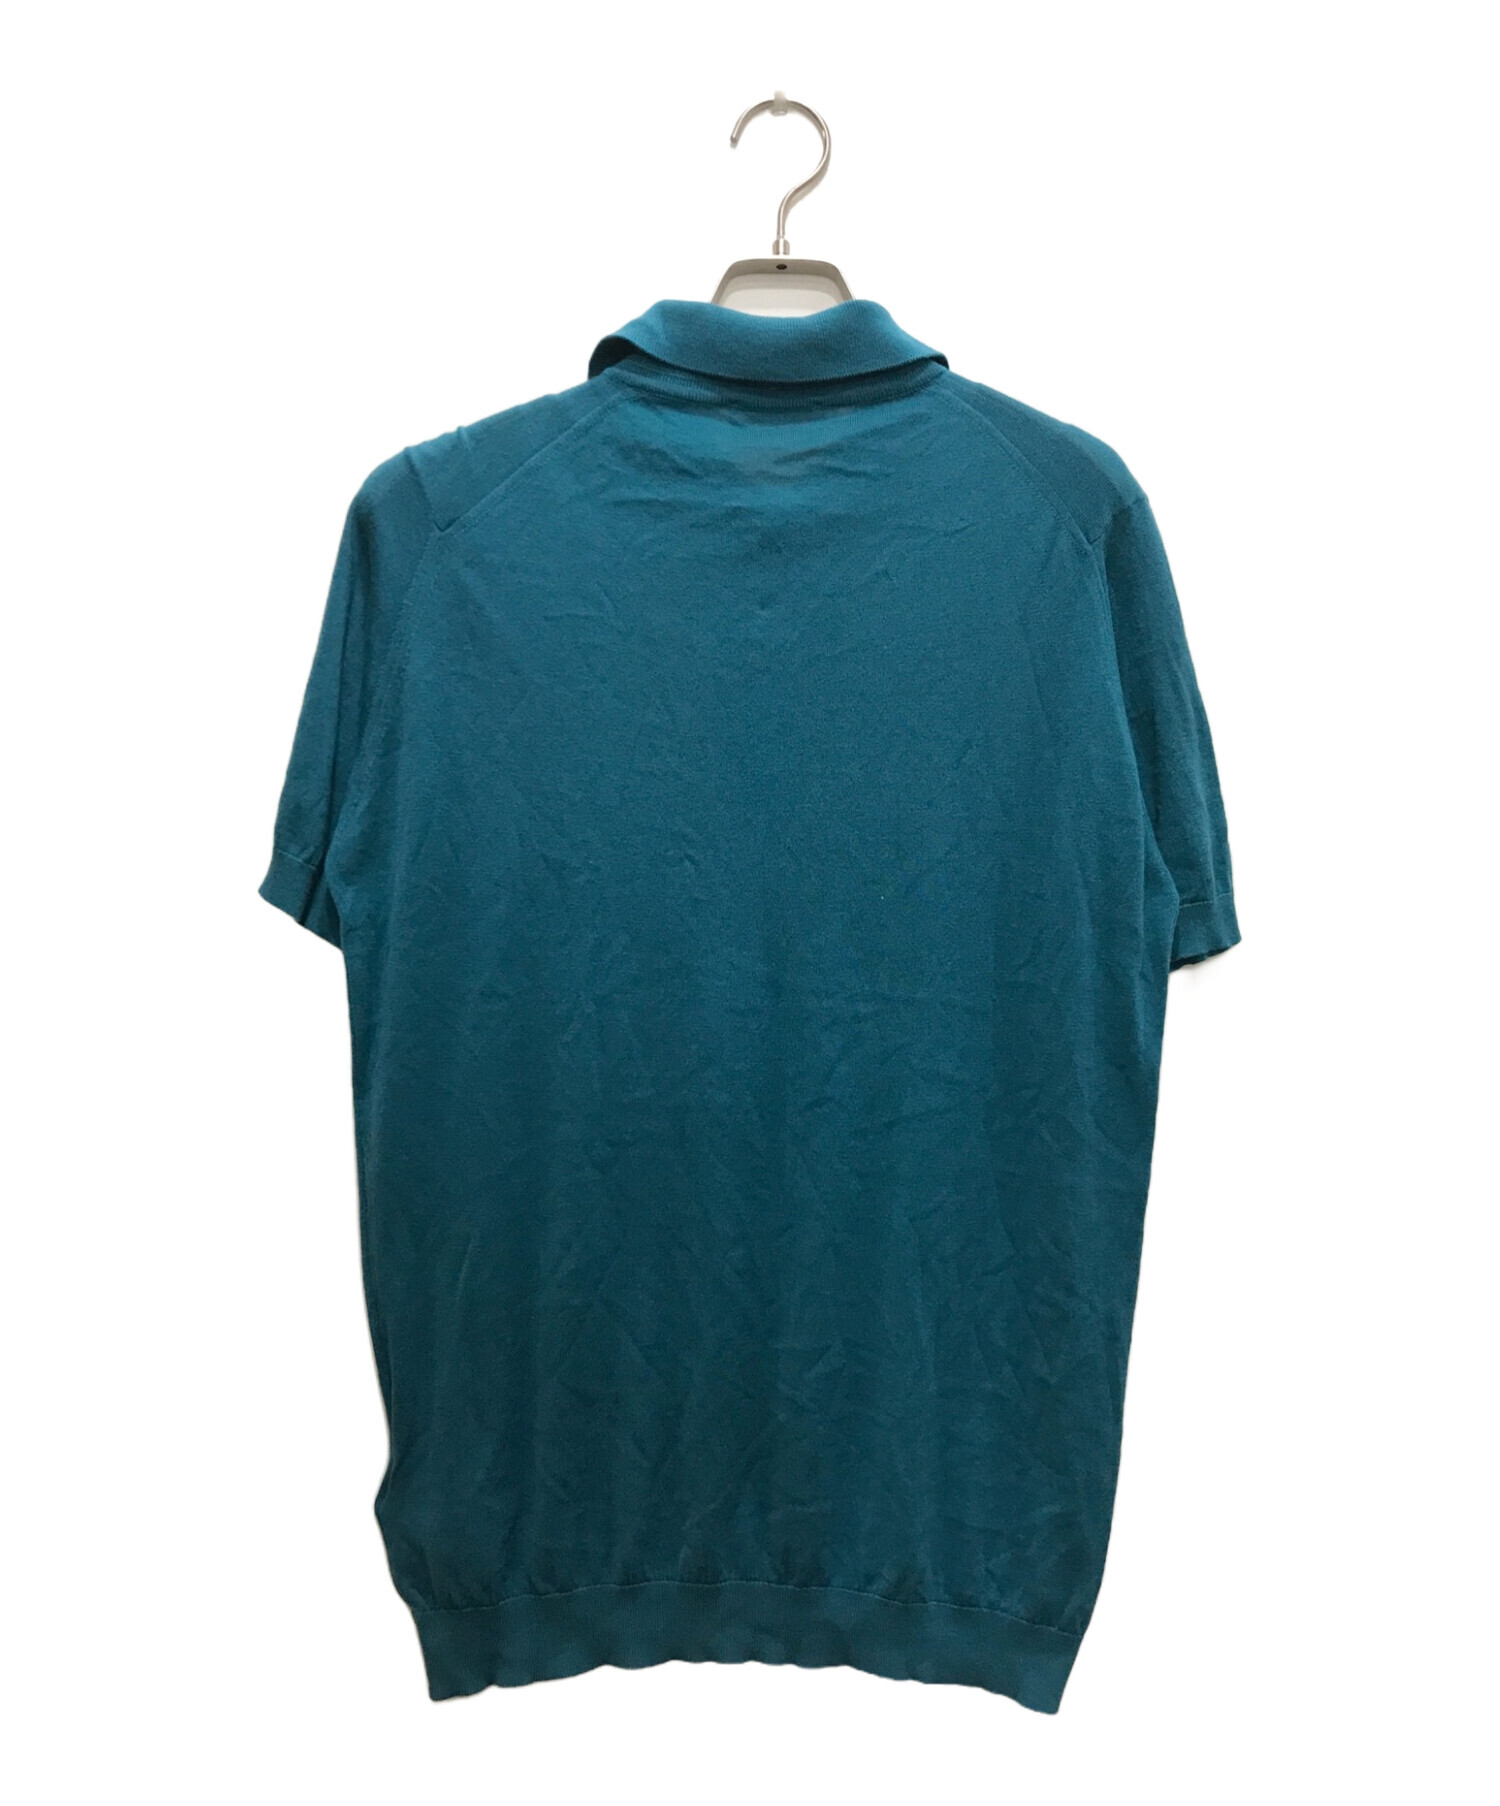 JOHN SMEDLEY (ジョンスメドレー) カシミヤコットンニットポロシャツ ブルー サイズ:M